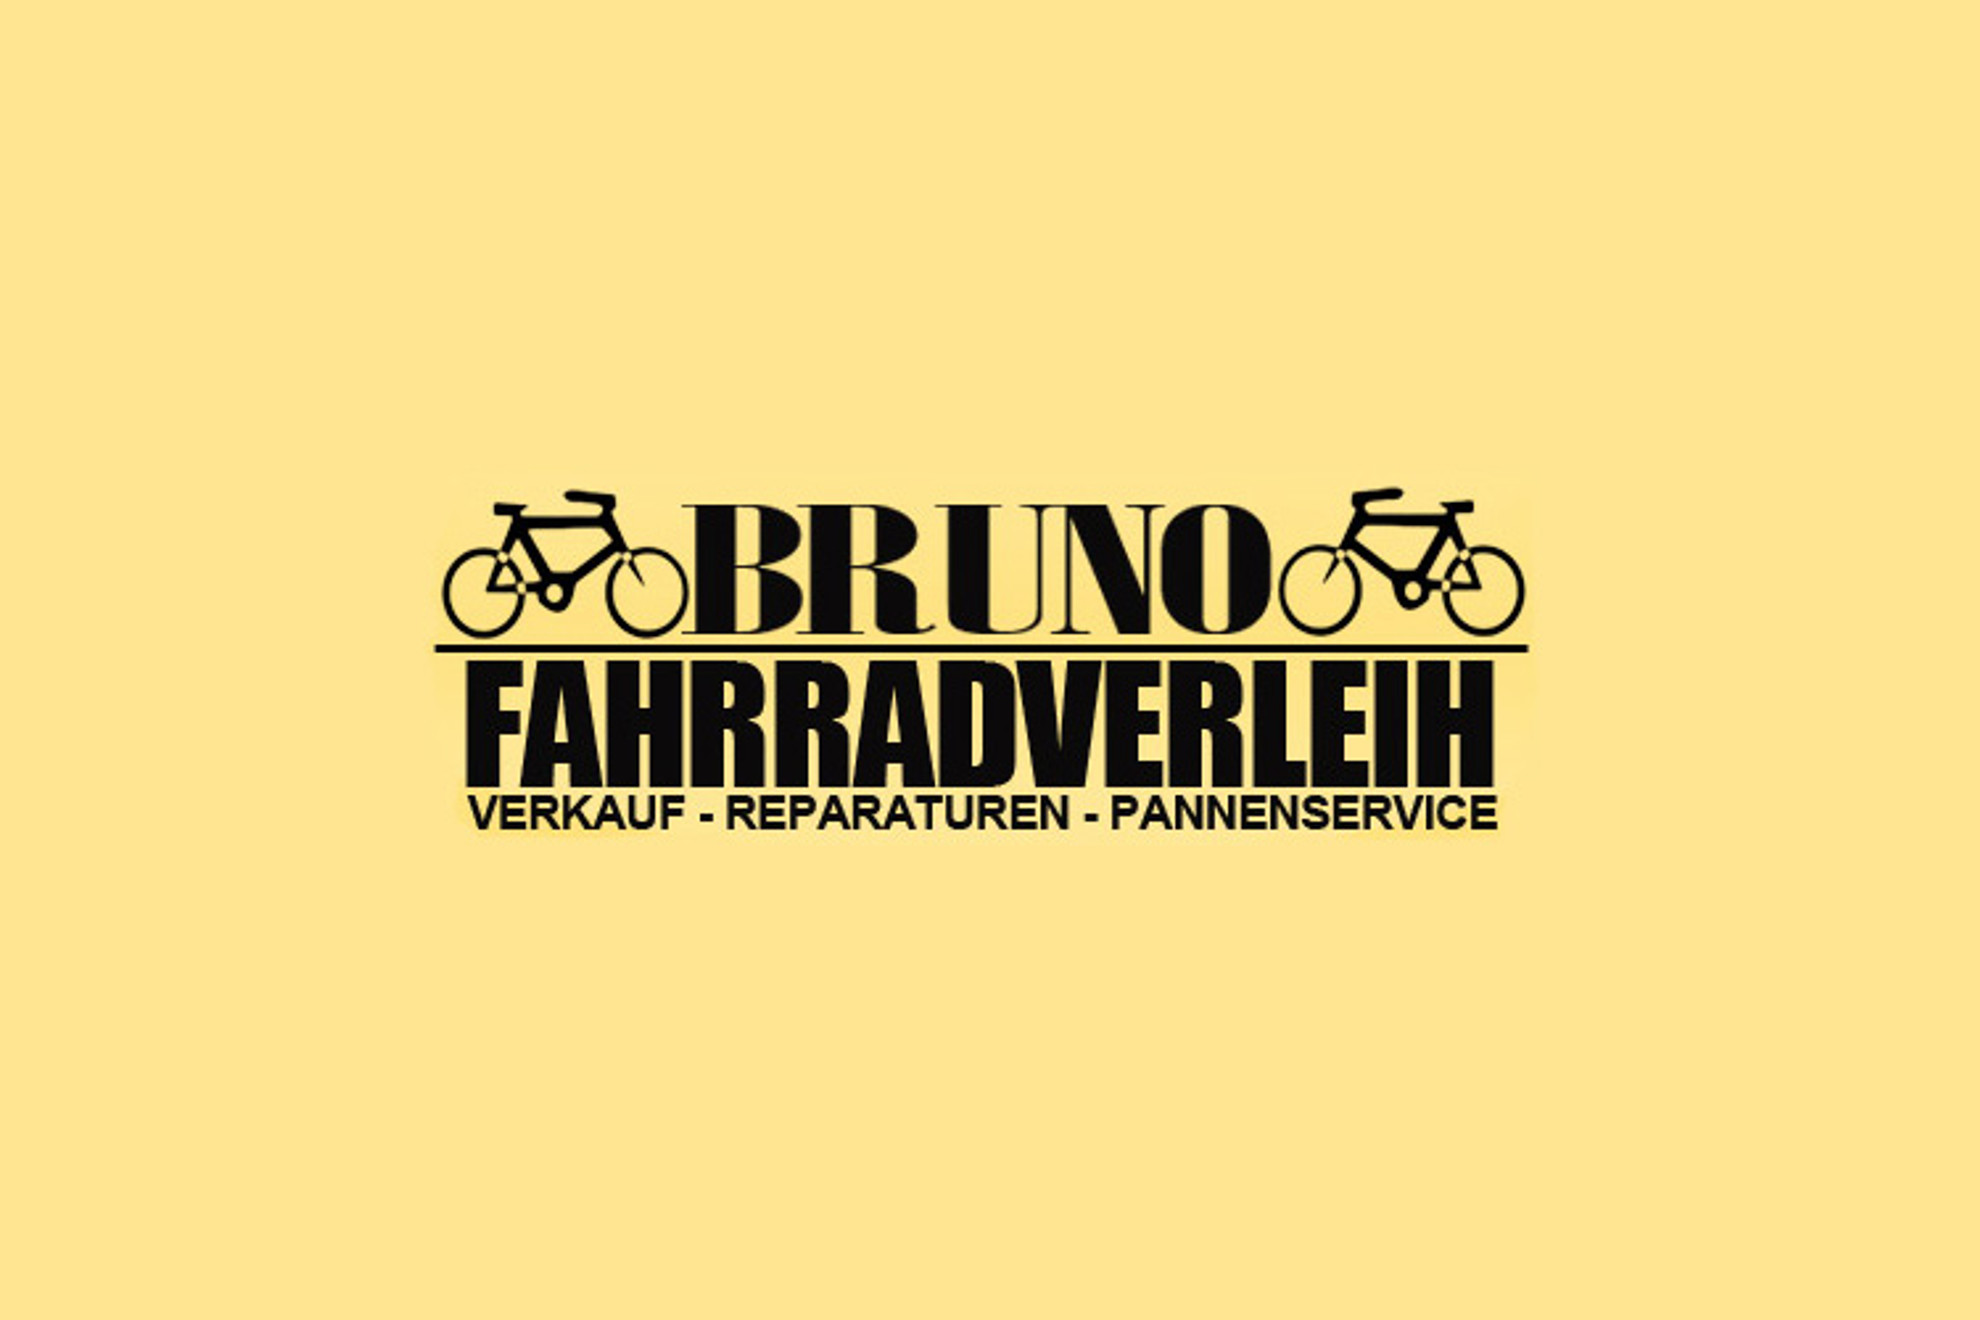 bruno-fahrradverleih-logo.jpg